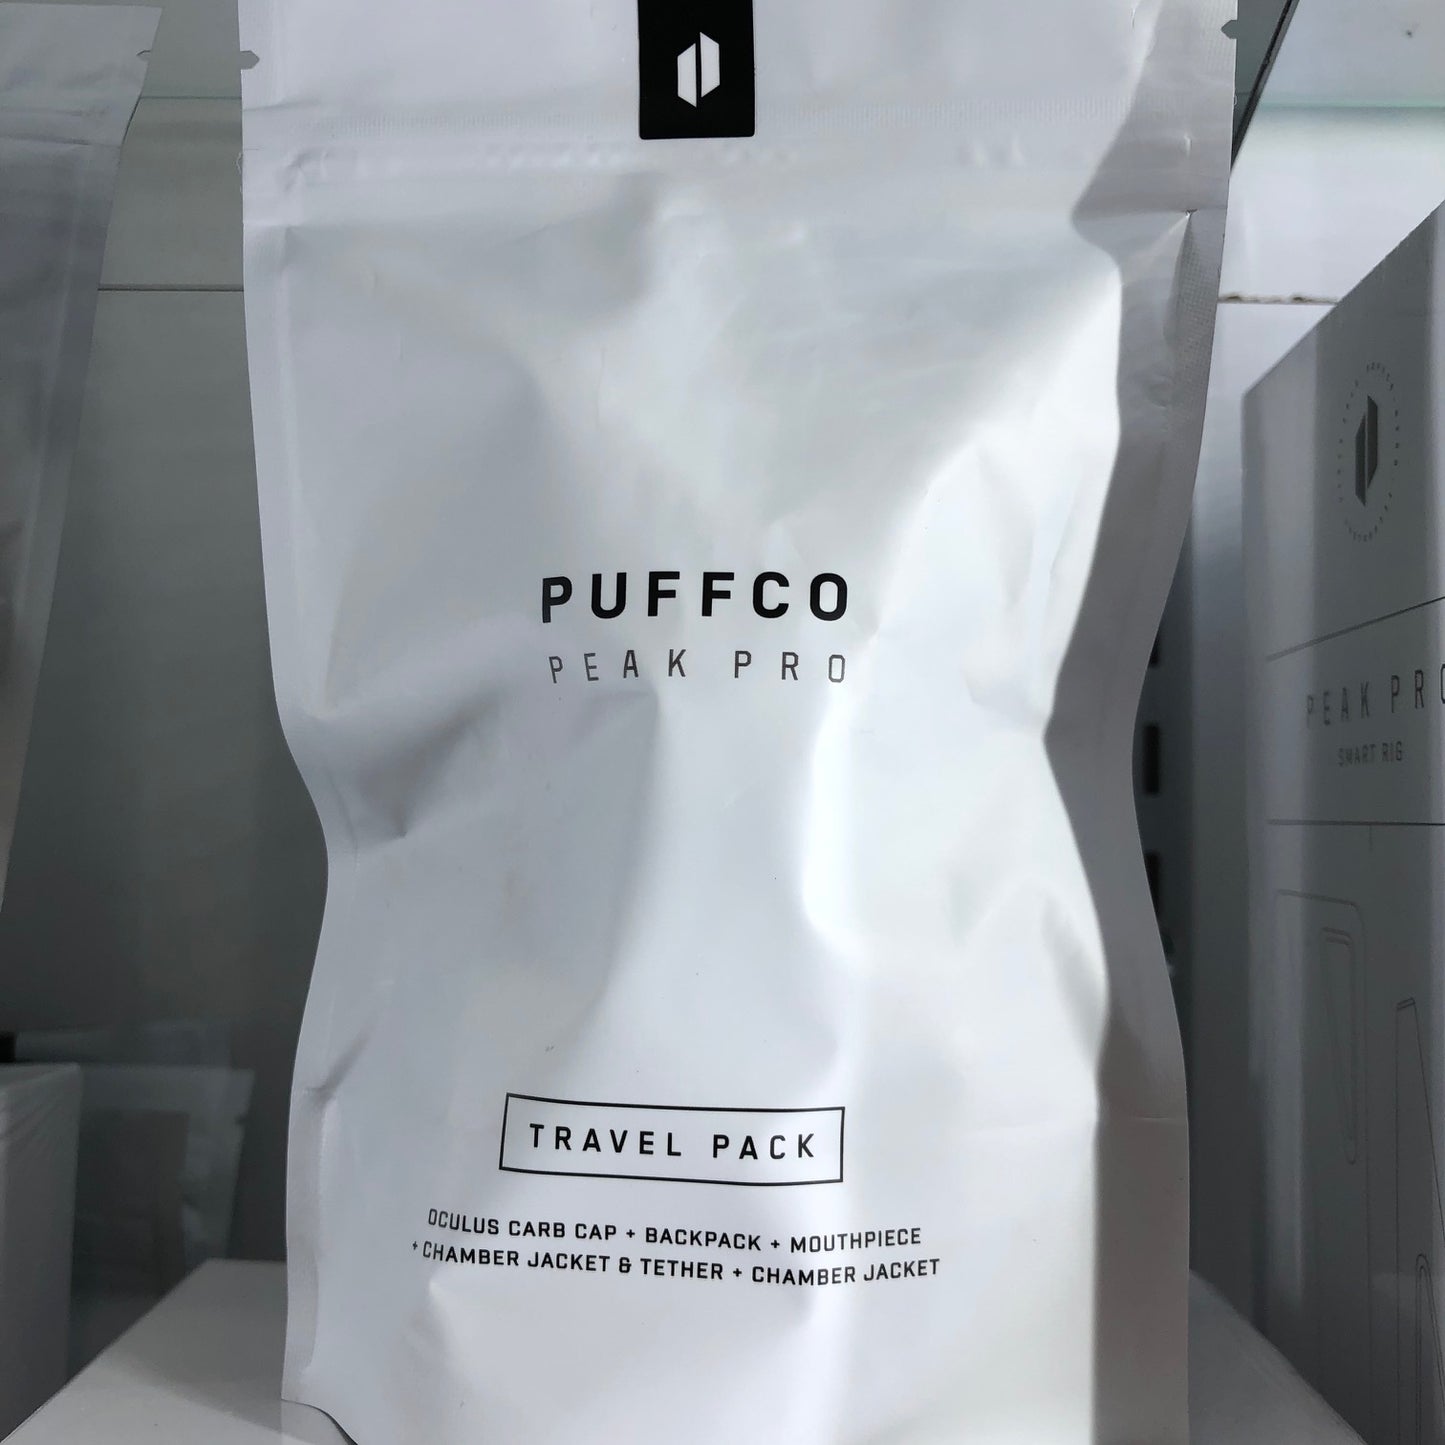 puffco peak pro travel pack